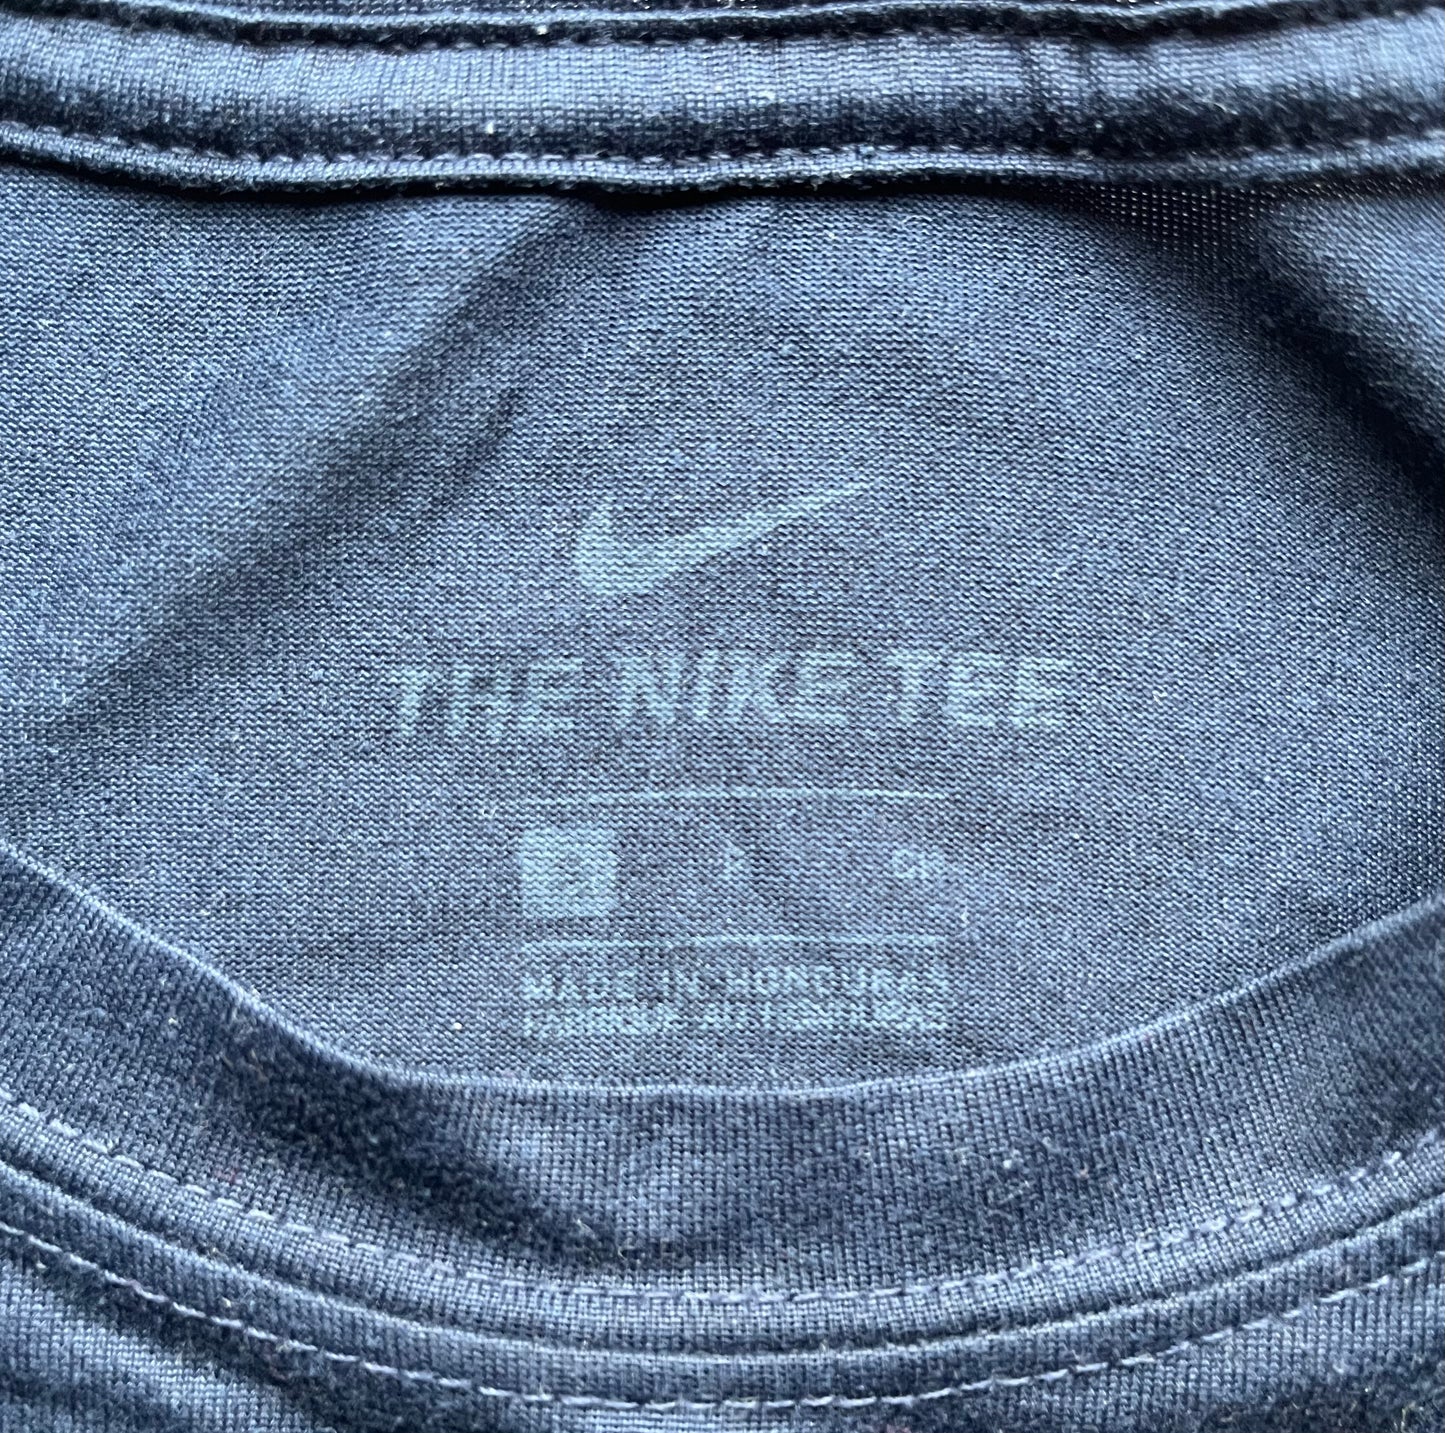 University of North Carolina - Nike Dri-Fit Tee (Small)